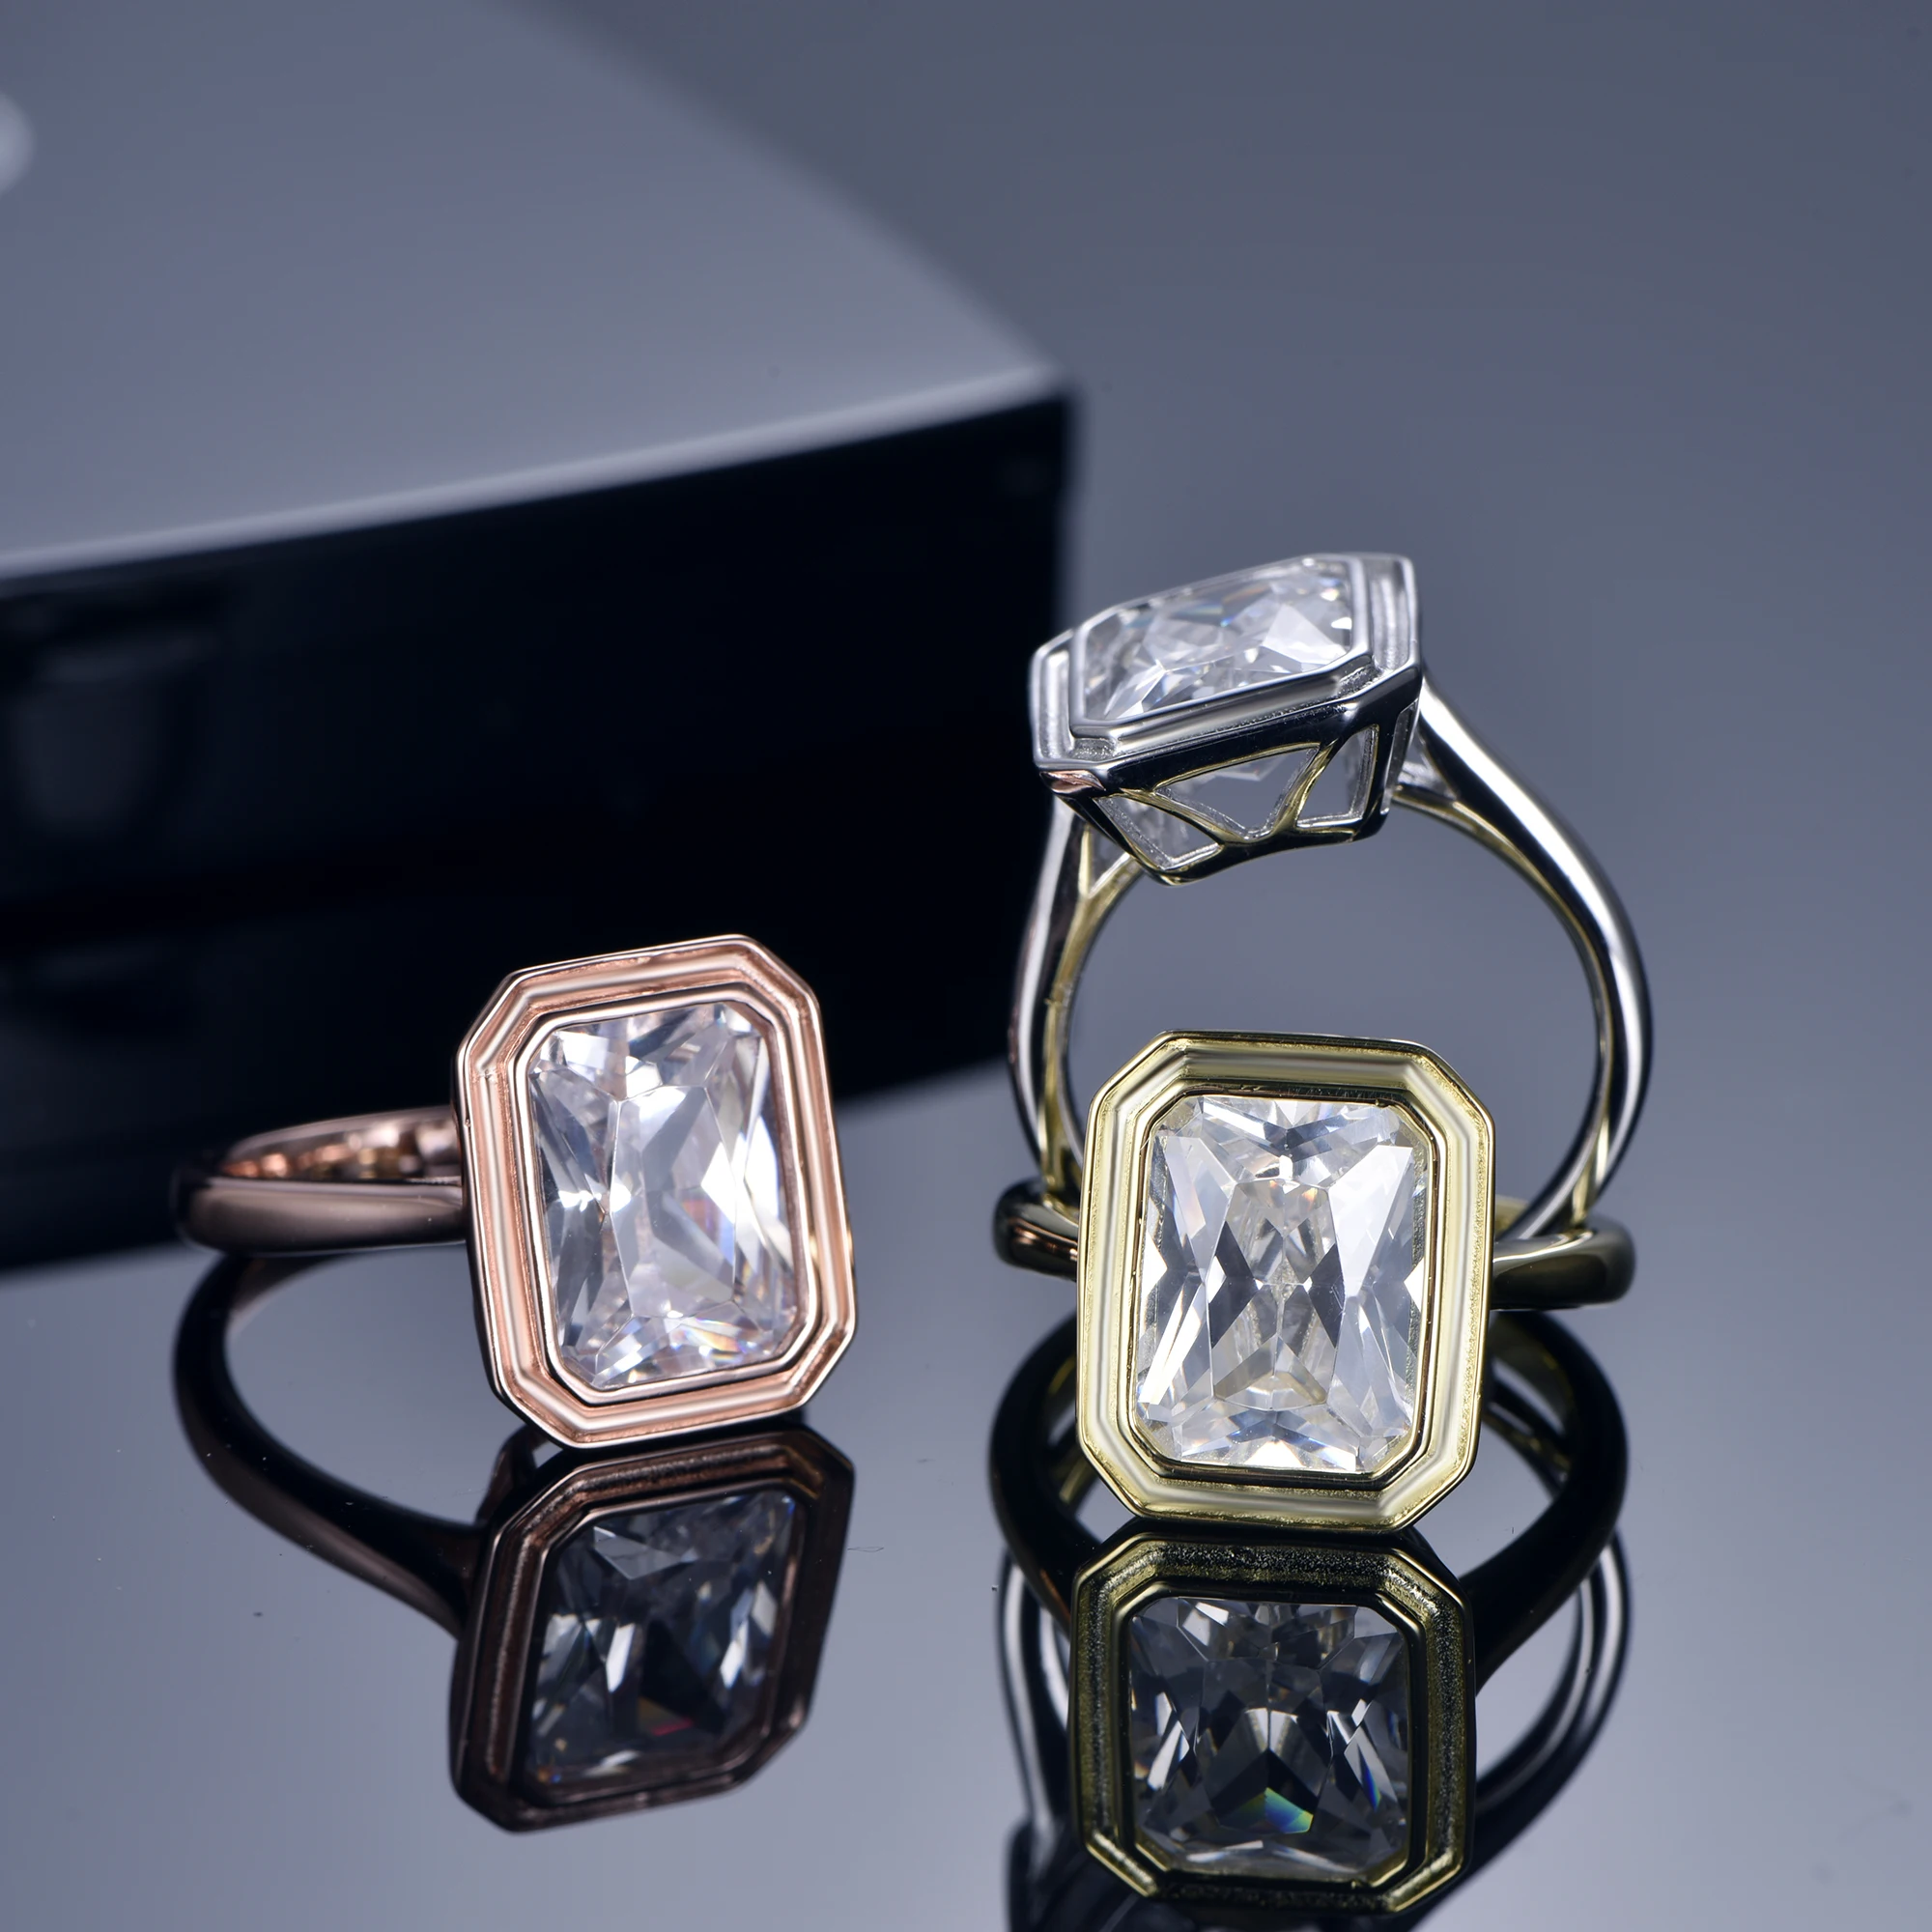 2021 custom men wedding rings jewelry14K gold plated rings for women 925 sterling silver engagement gold diamond wedding rings